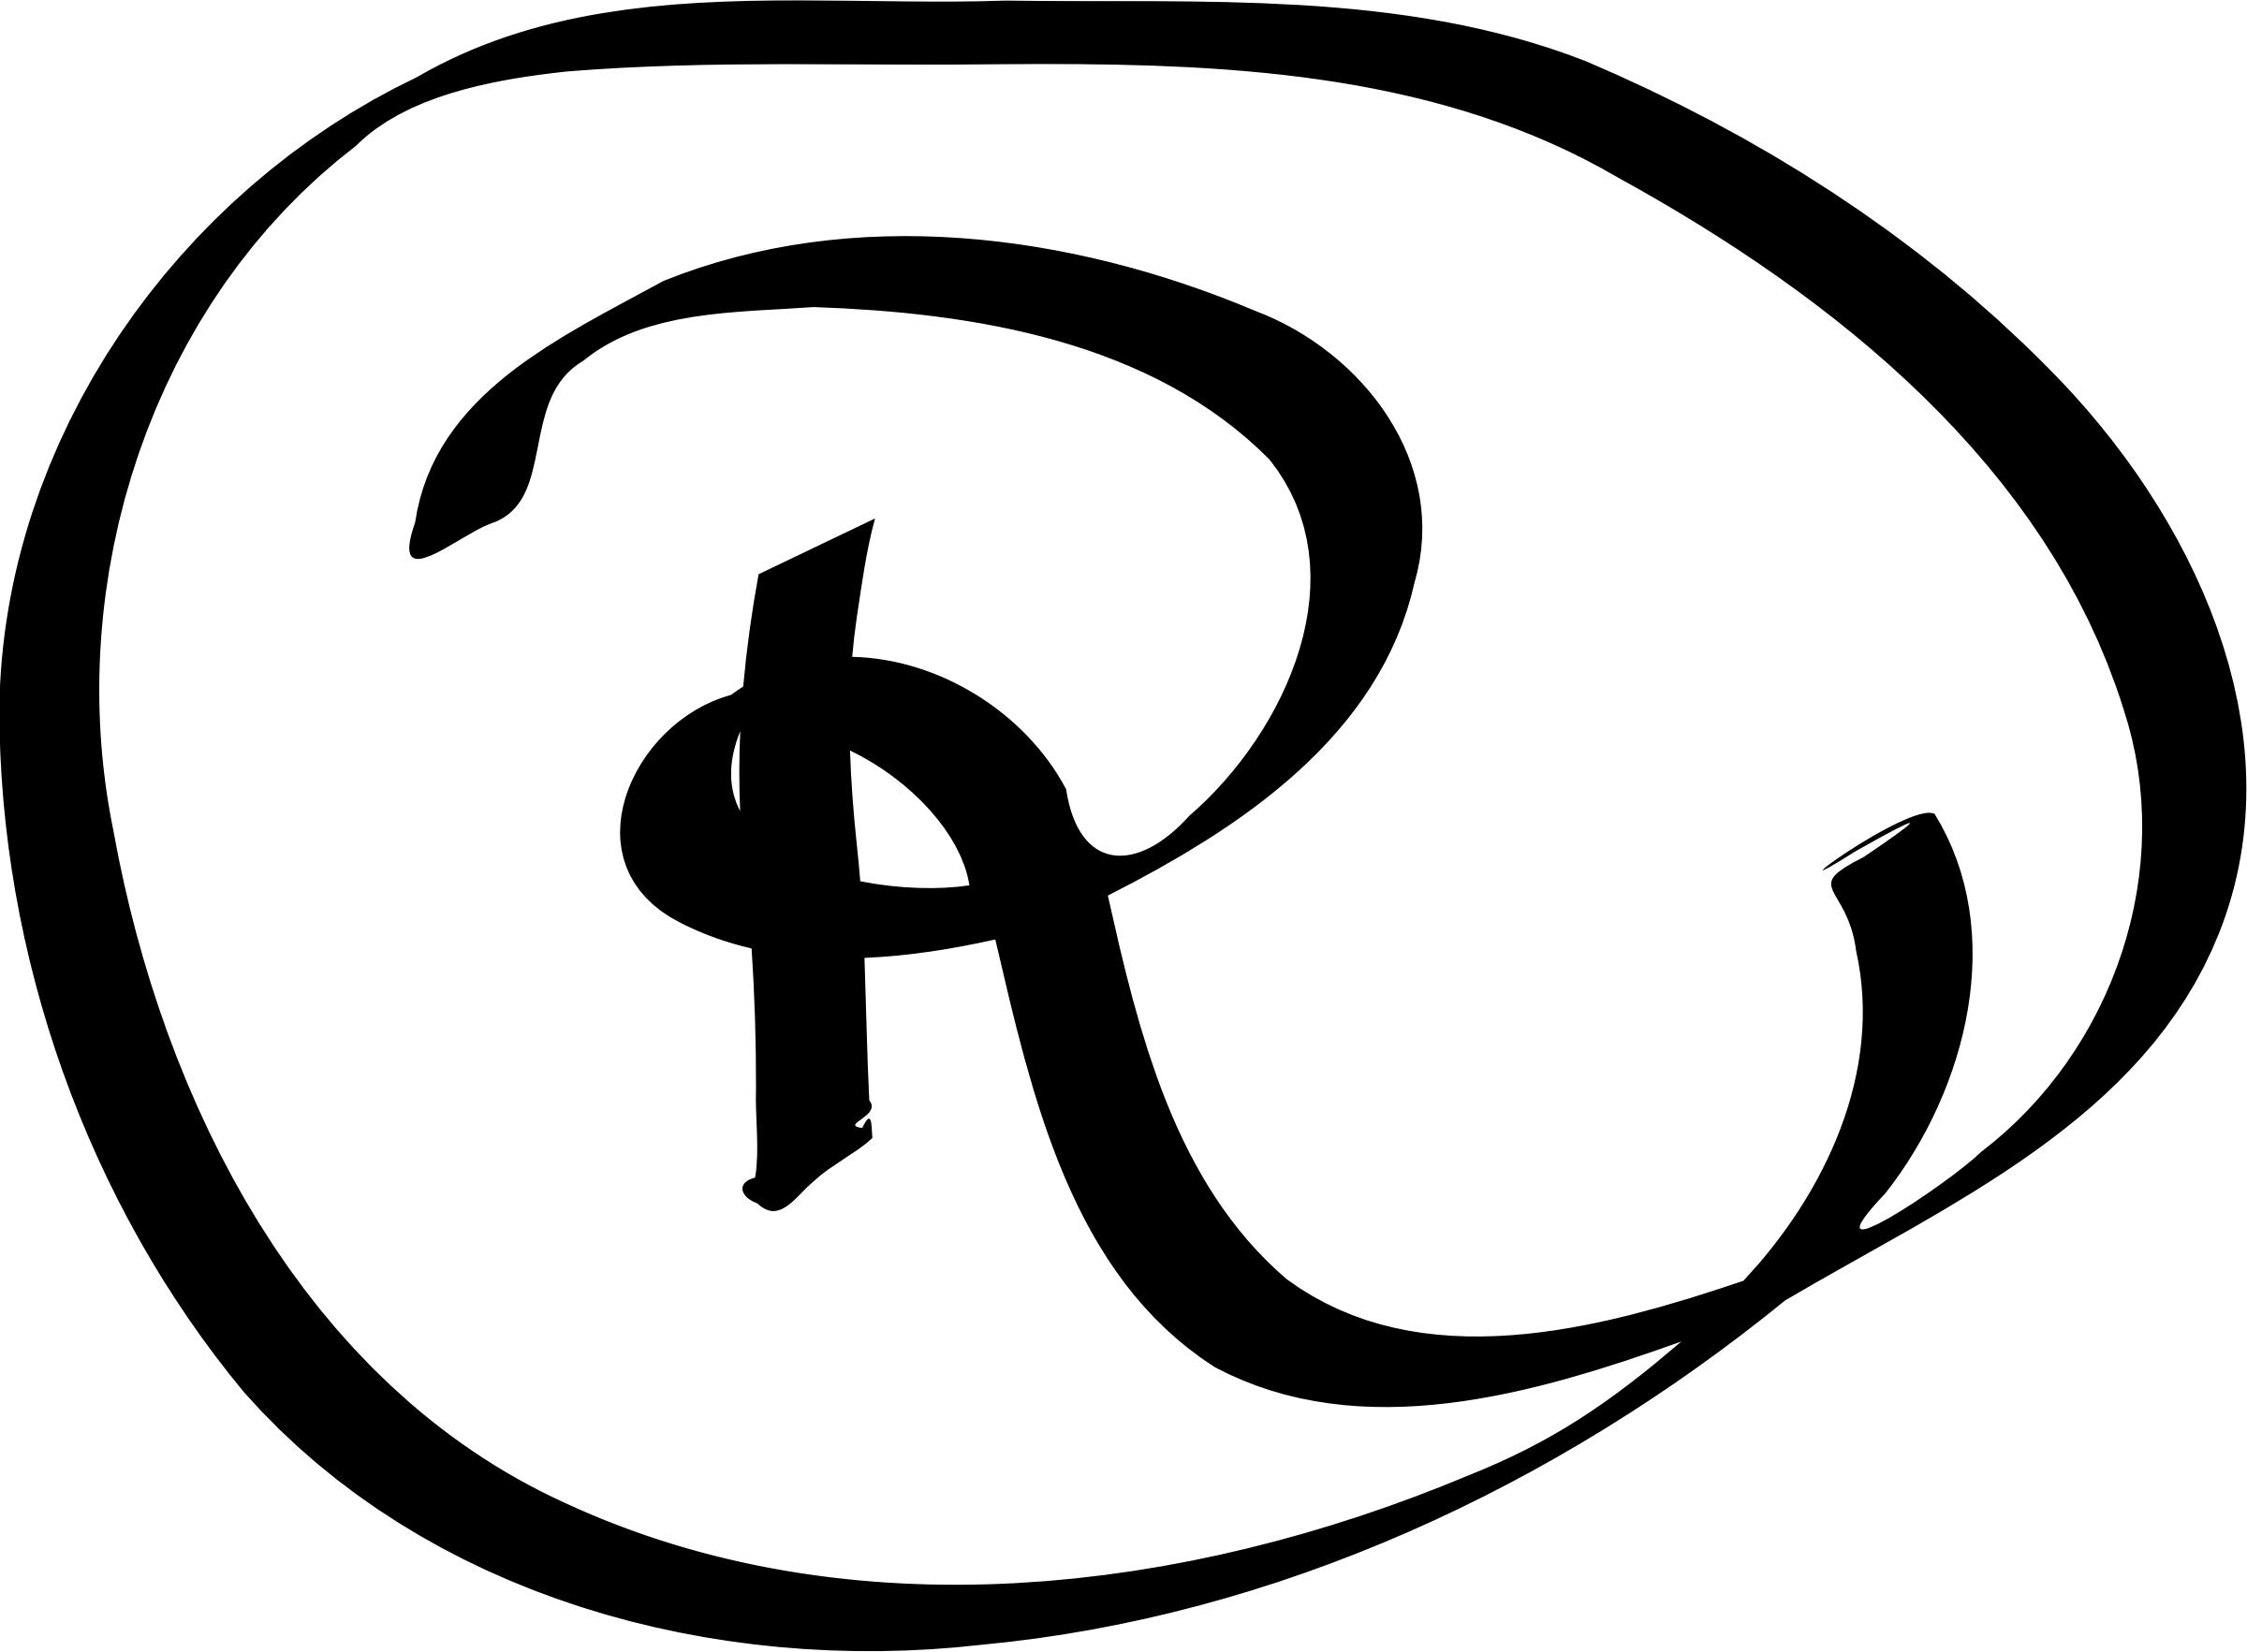 Registered Trademark Symbol icons